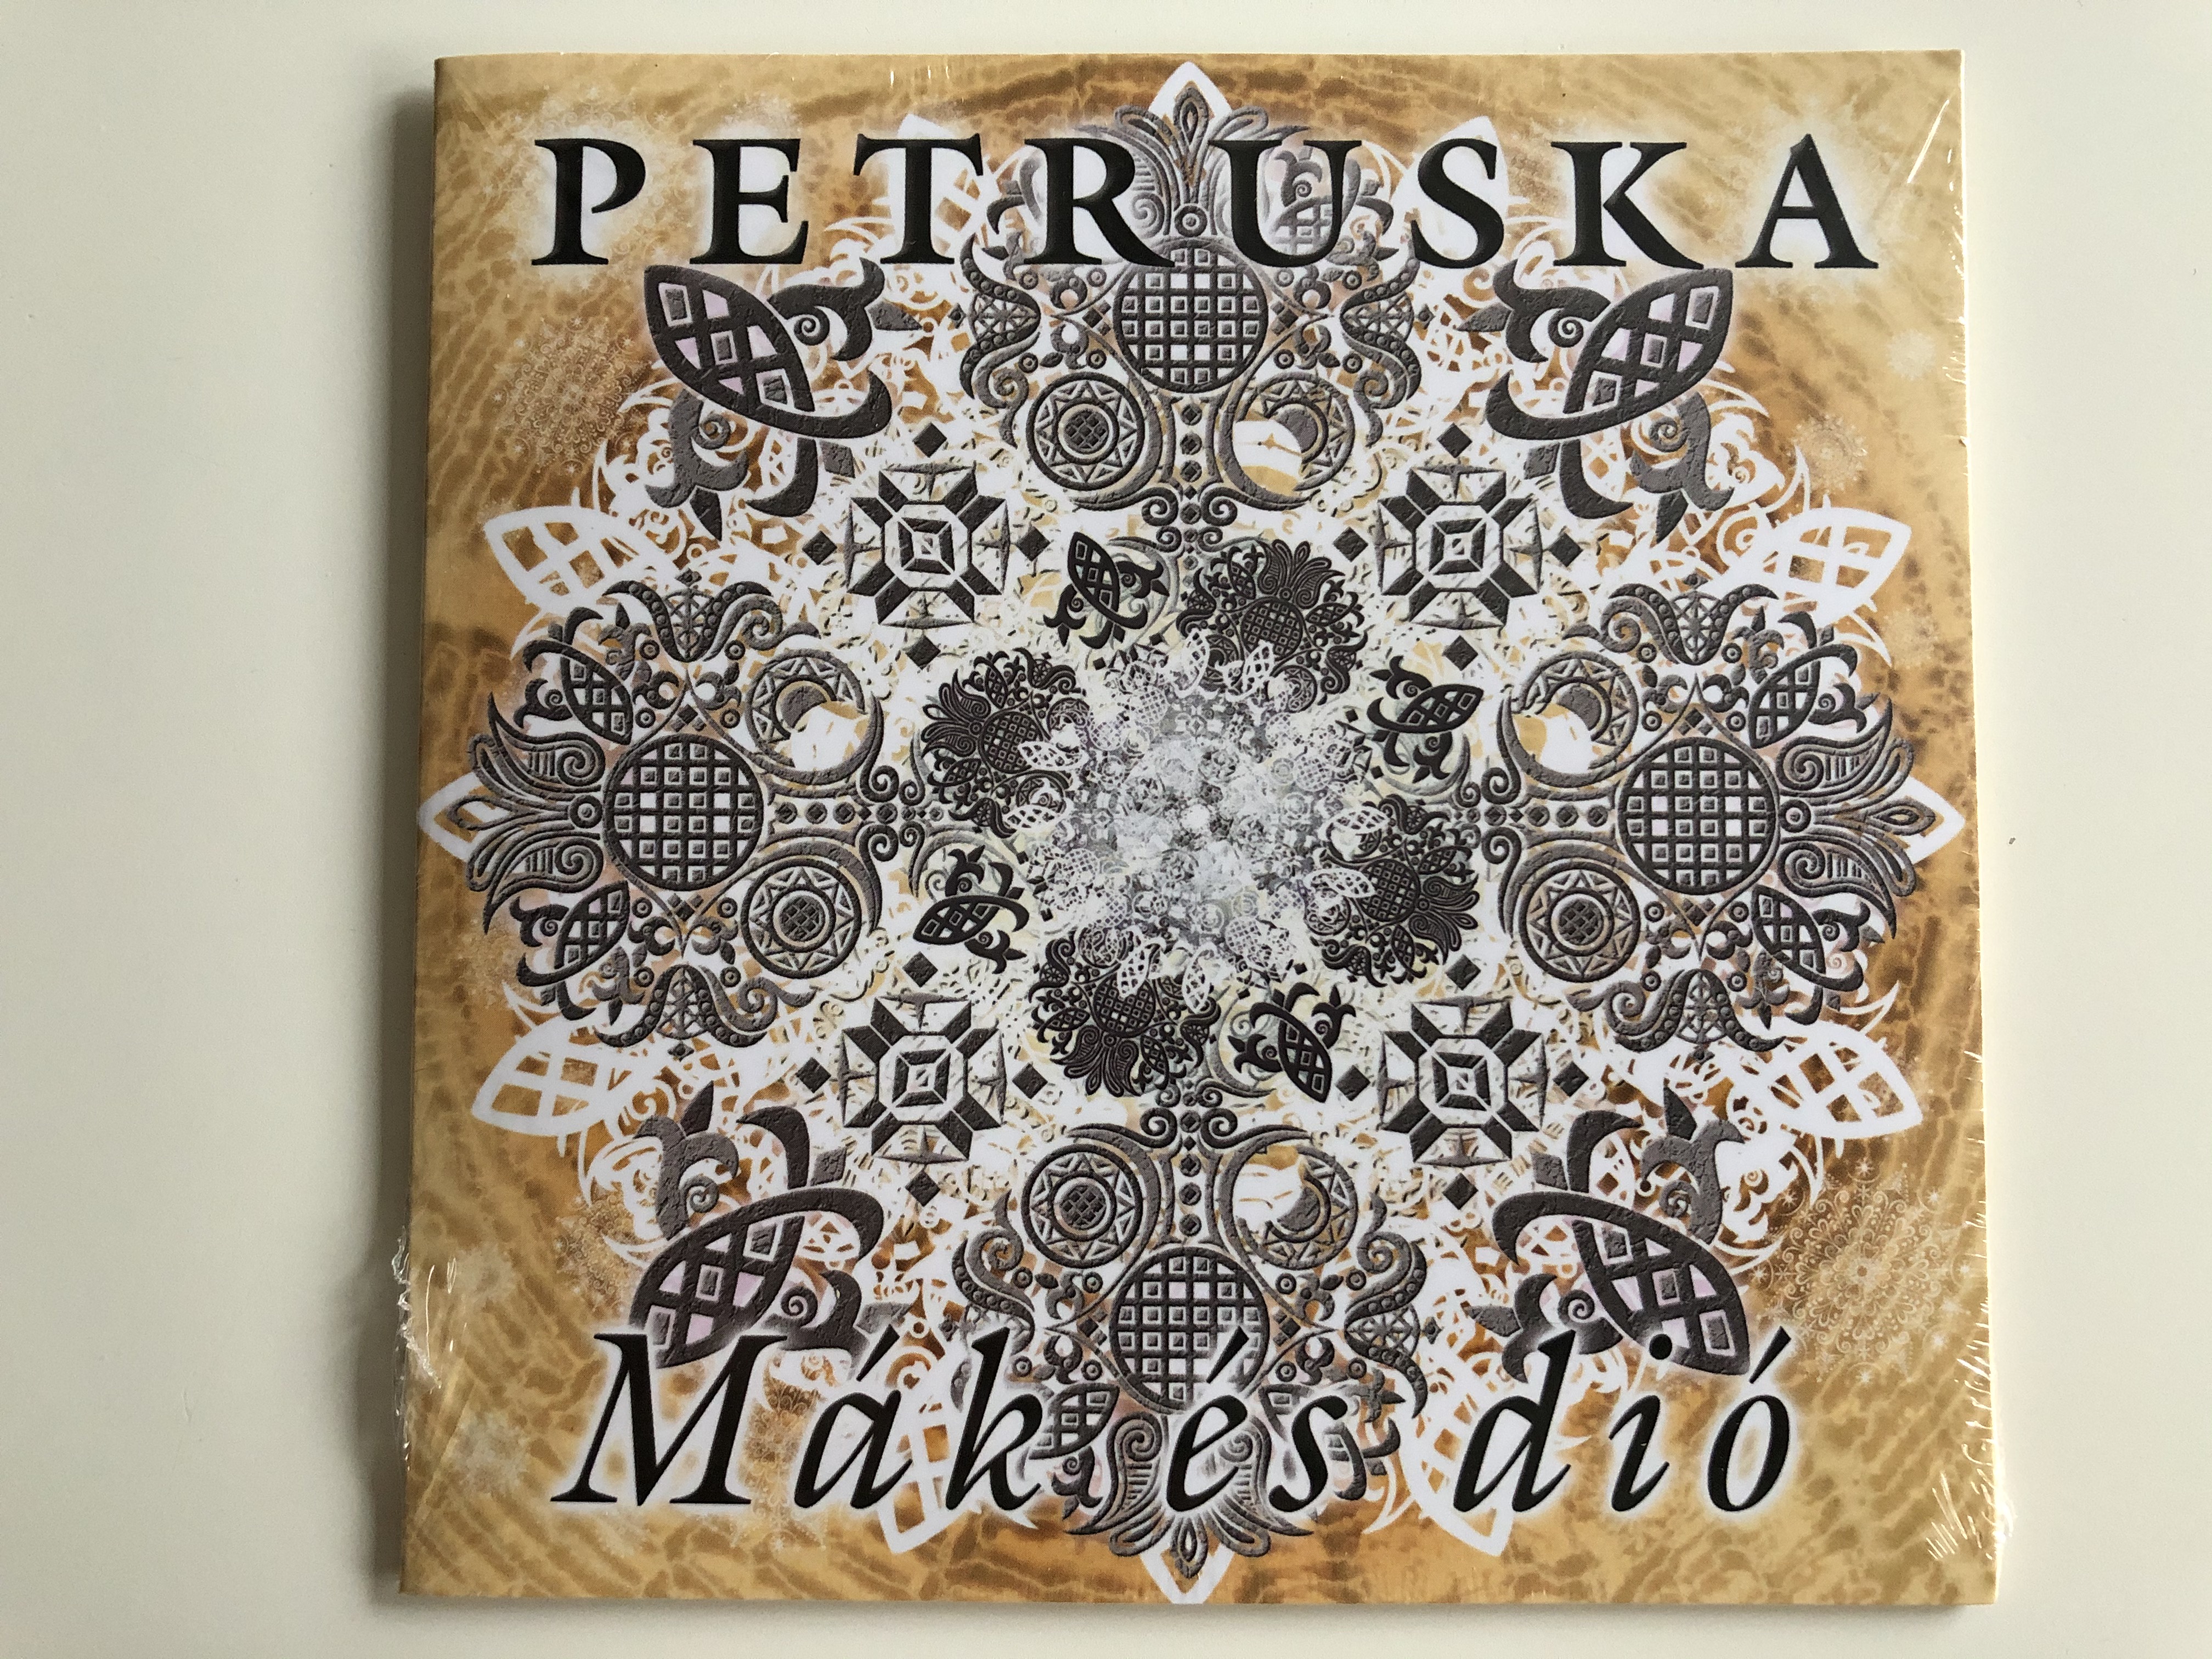 petruska-mak-es-dio-gryllus-audio-cd-2017-gcd-195-1-.jpg